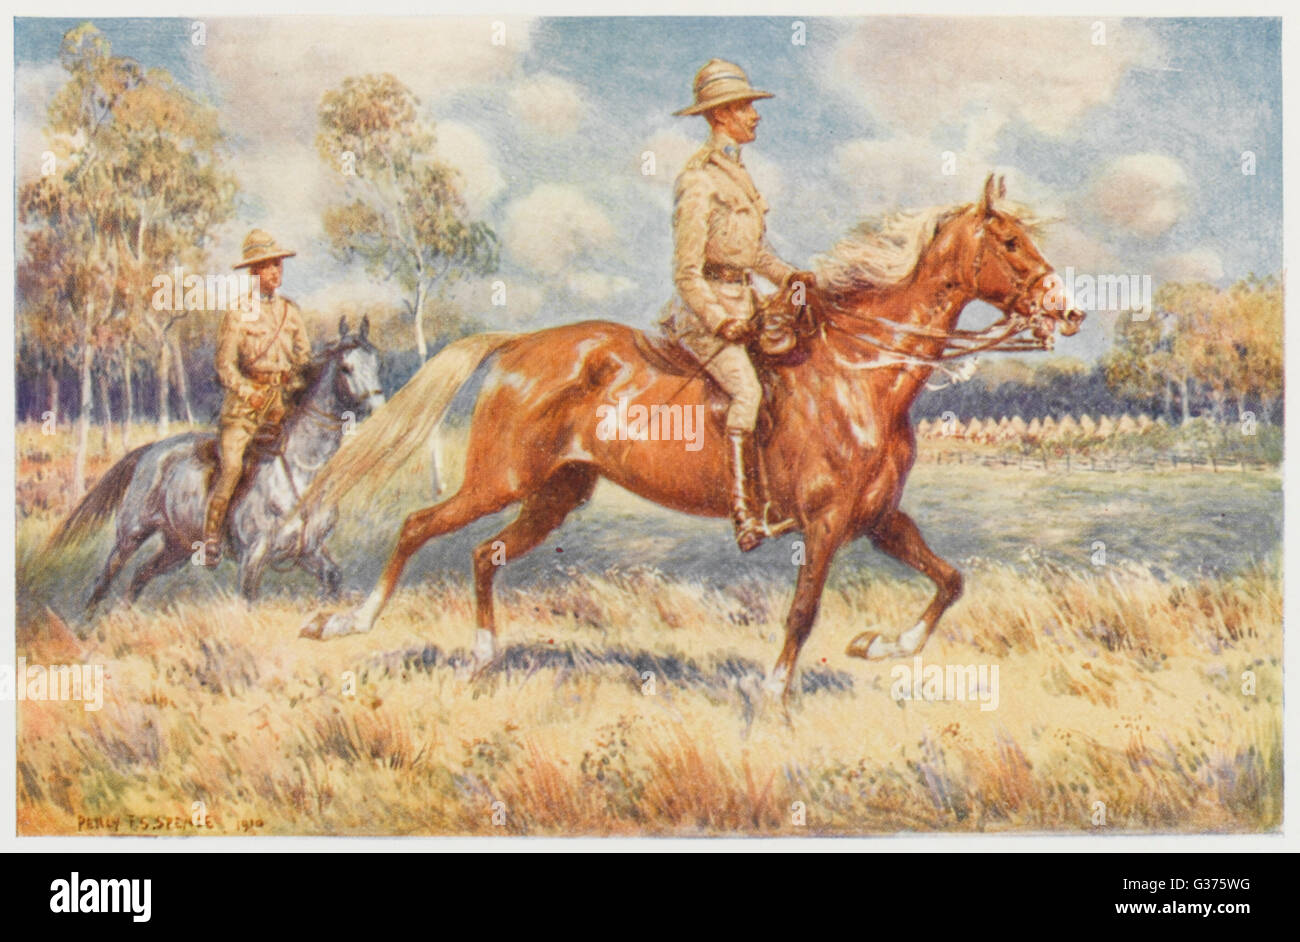 A Colonel of Australia's  citizen forces.         Date: 1910 Stock Photo